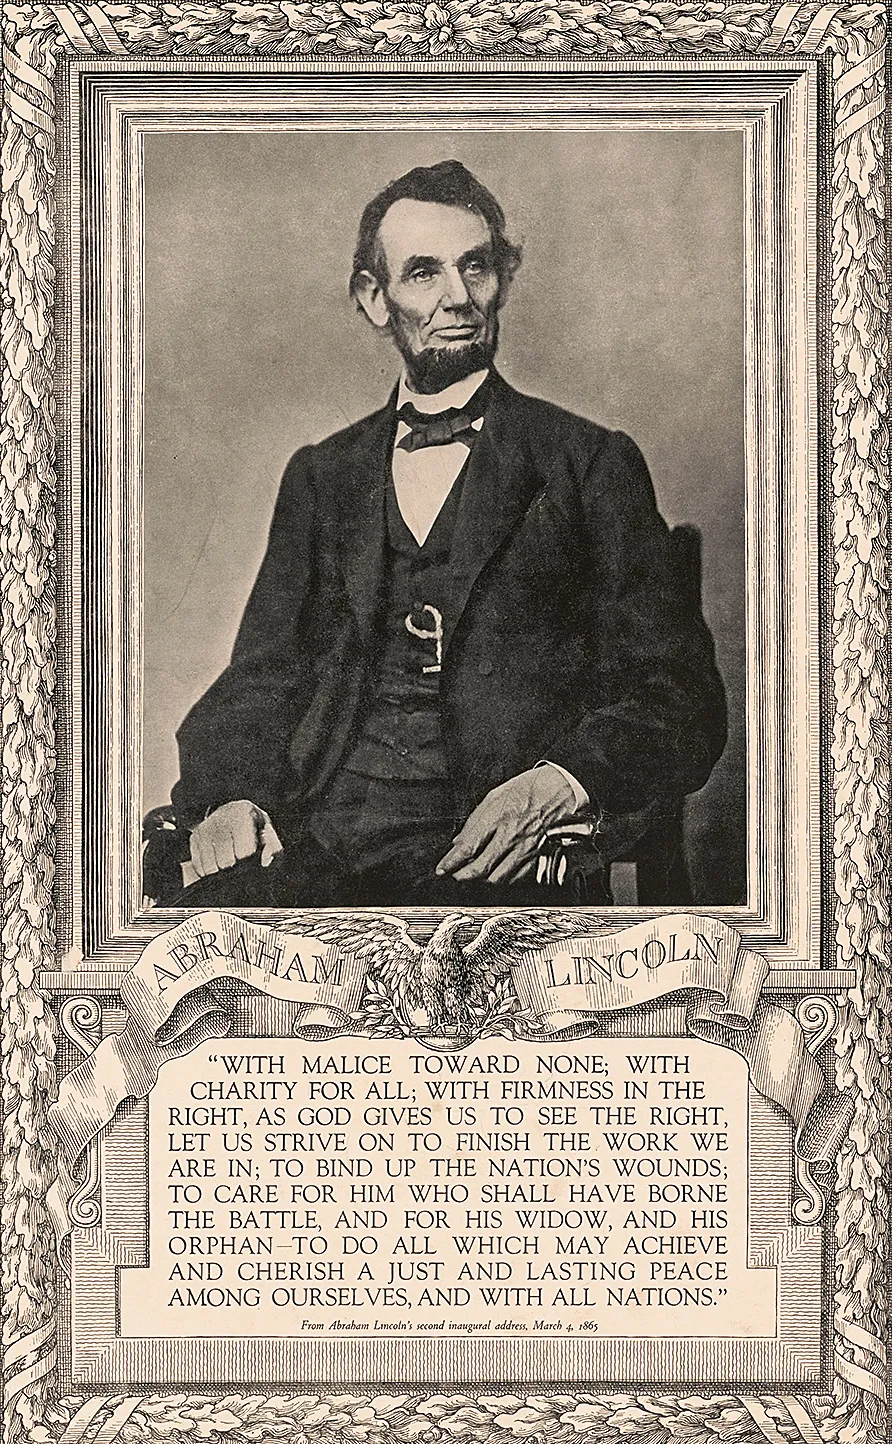 a portrait of Abraham Lincoln